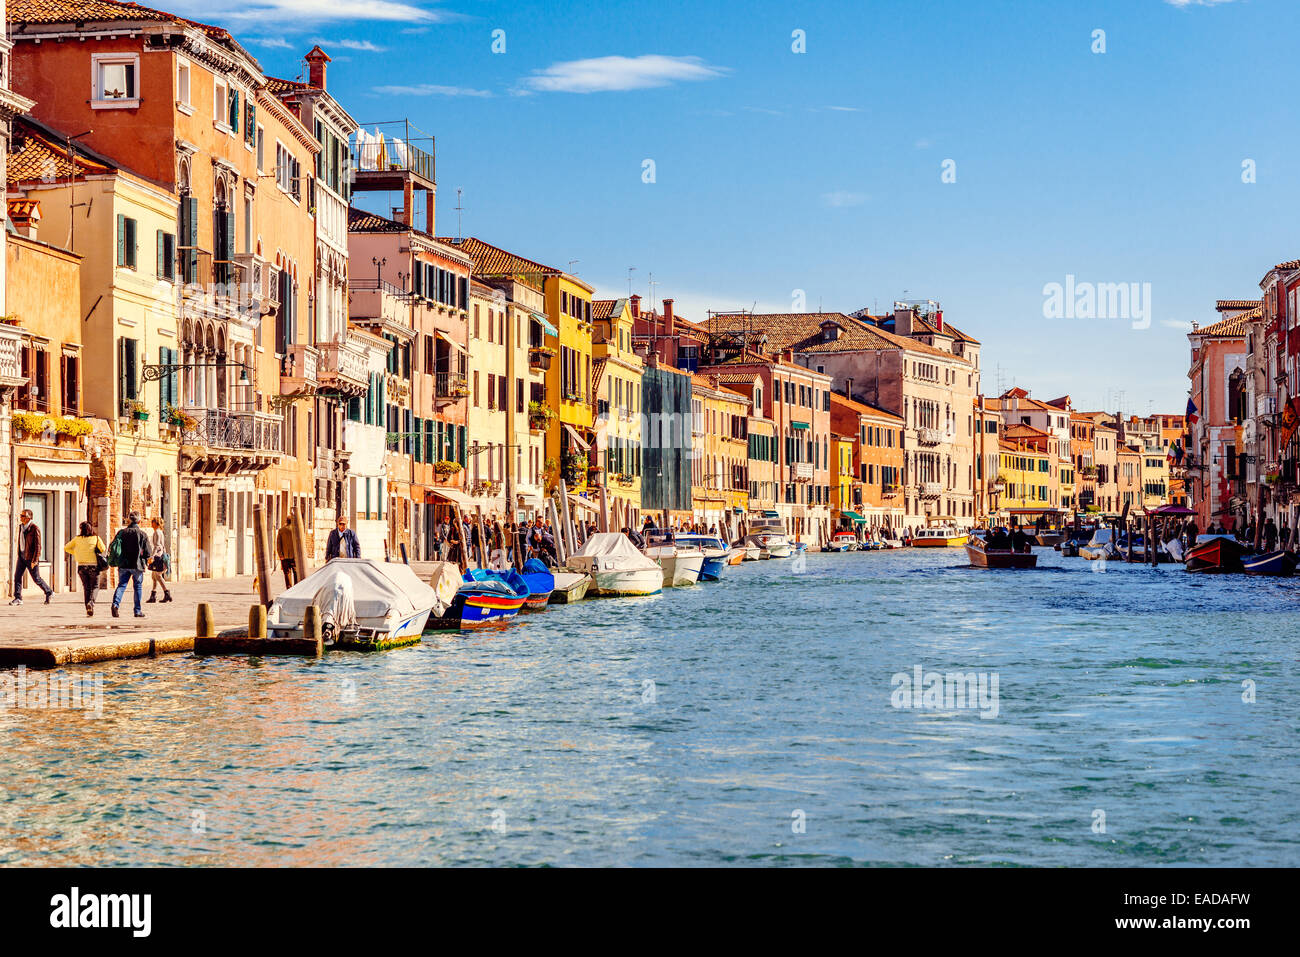 VENICE, ITALY - 26 OCTOBER 2014: Historical district of Venetian Ghetto on Cannaregio Canal. Stock Photo